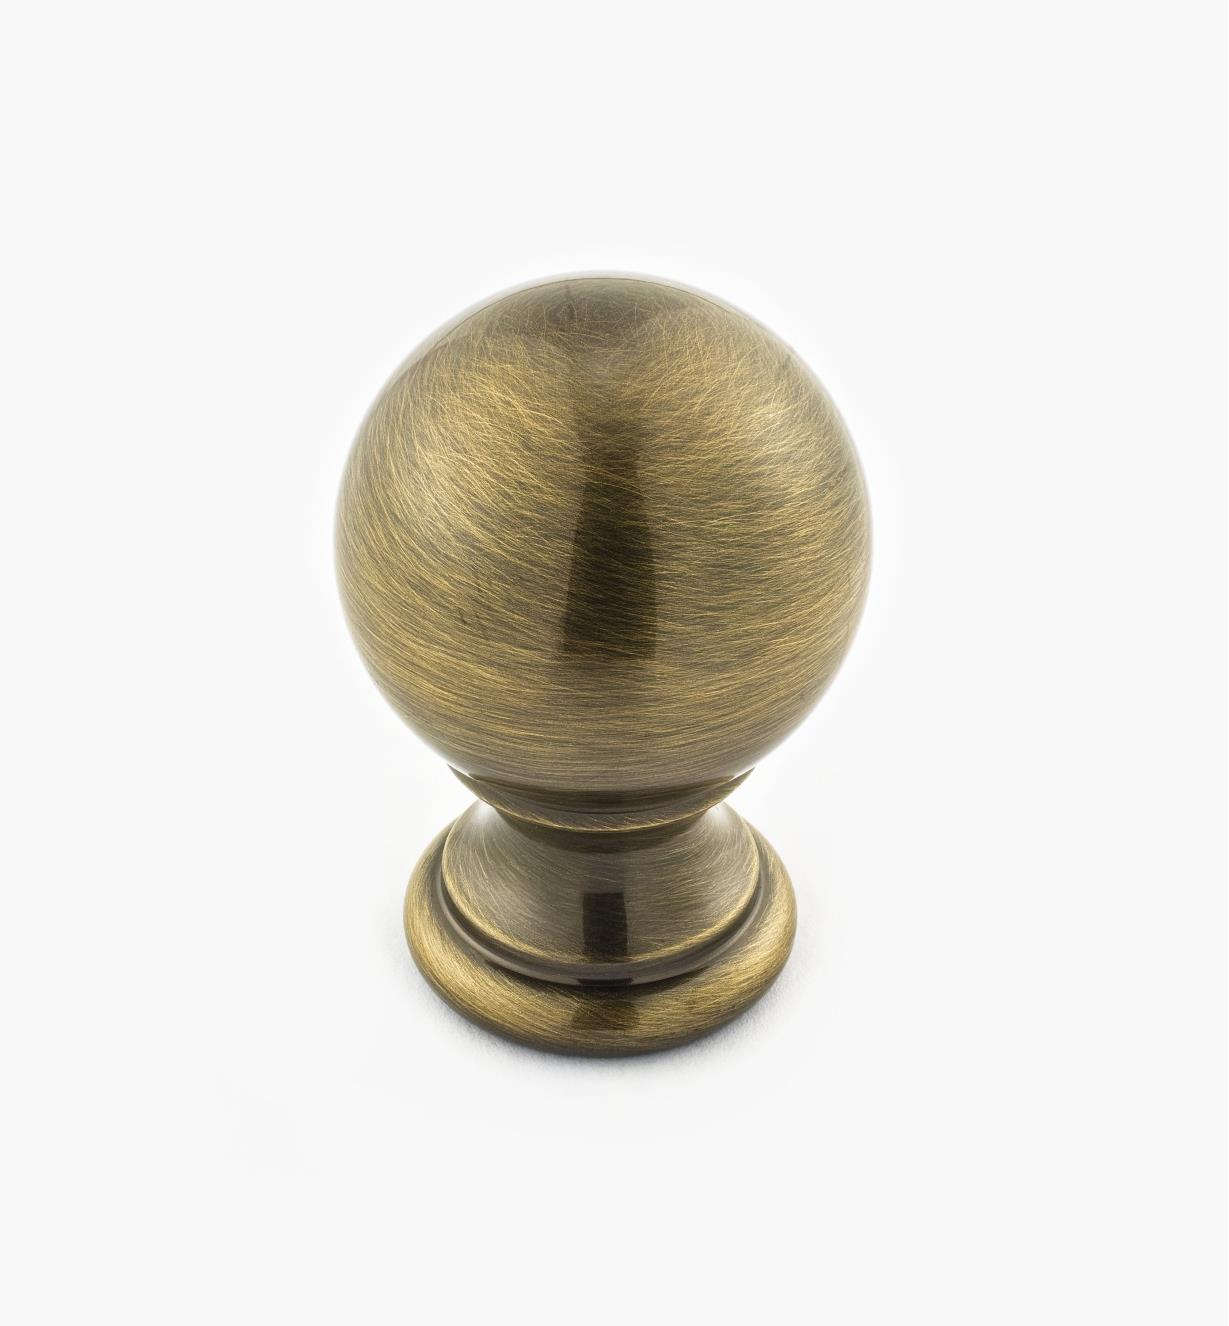 02W3224 - Antique Brass Suite - 1 1/8" x 1 3/4" Turned Brass Ball Knob